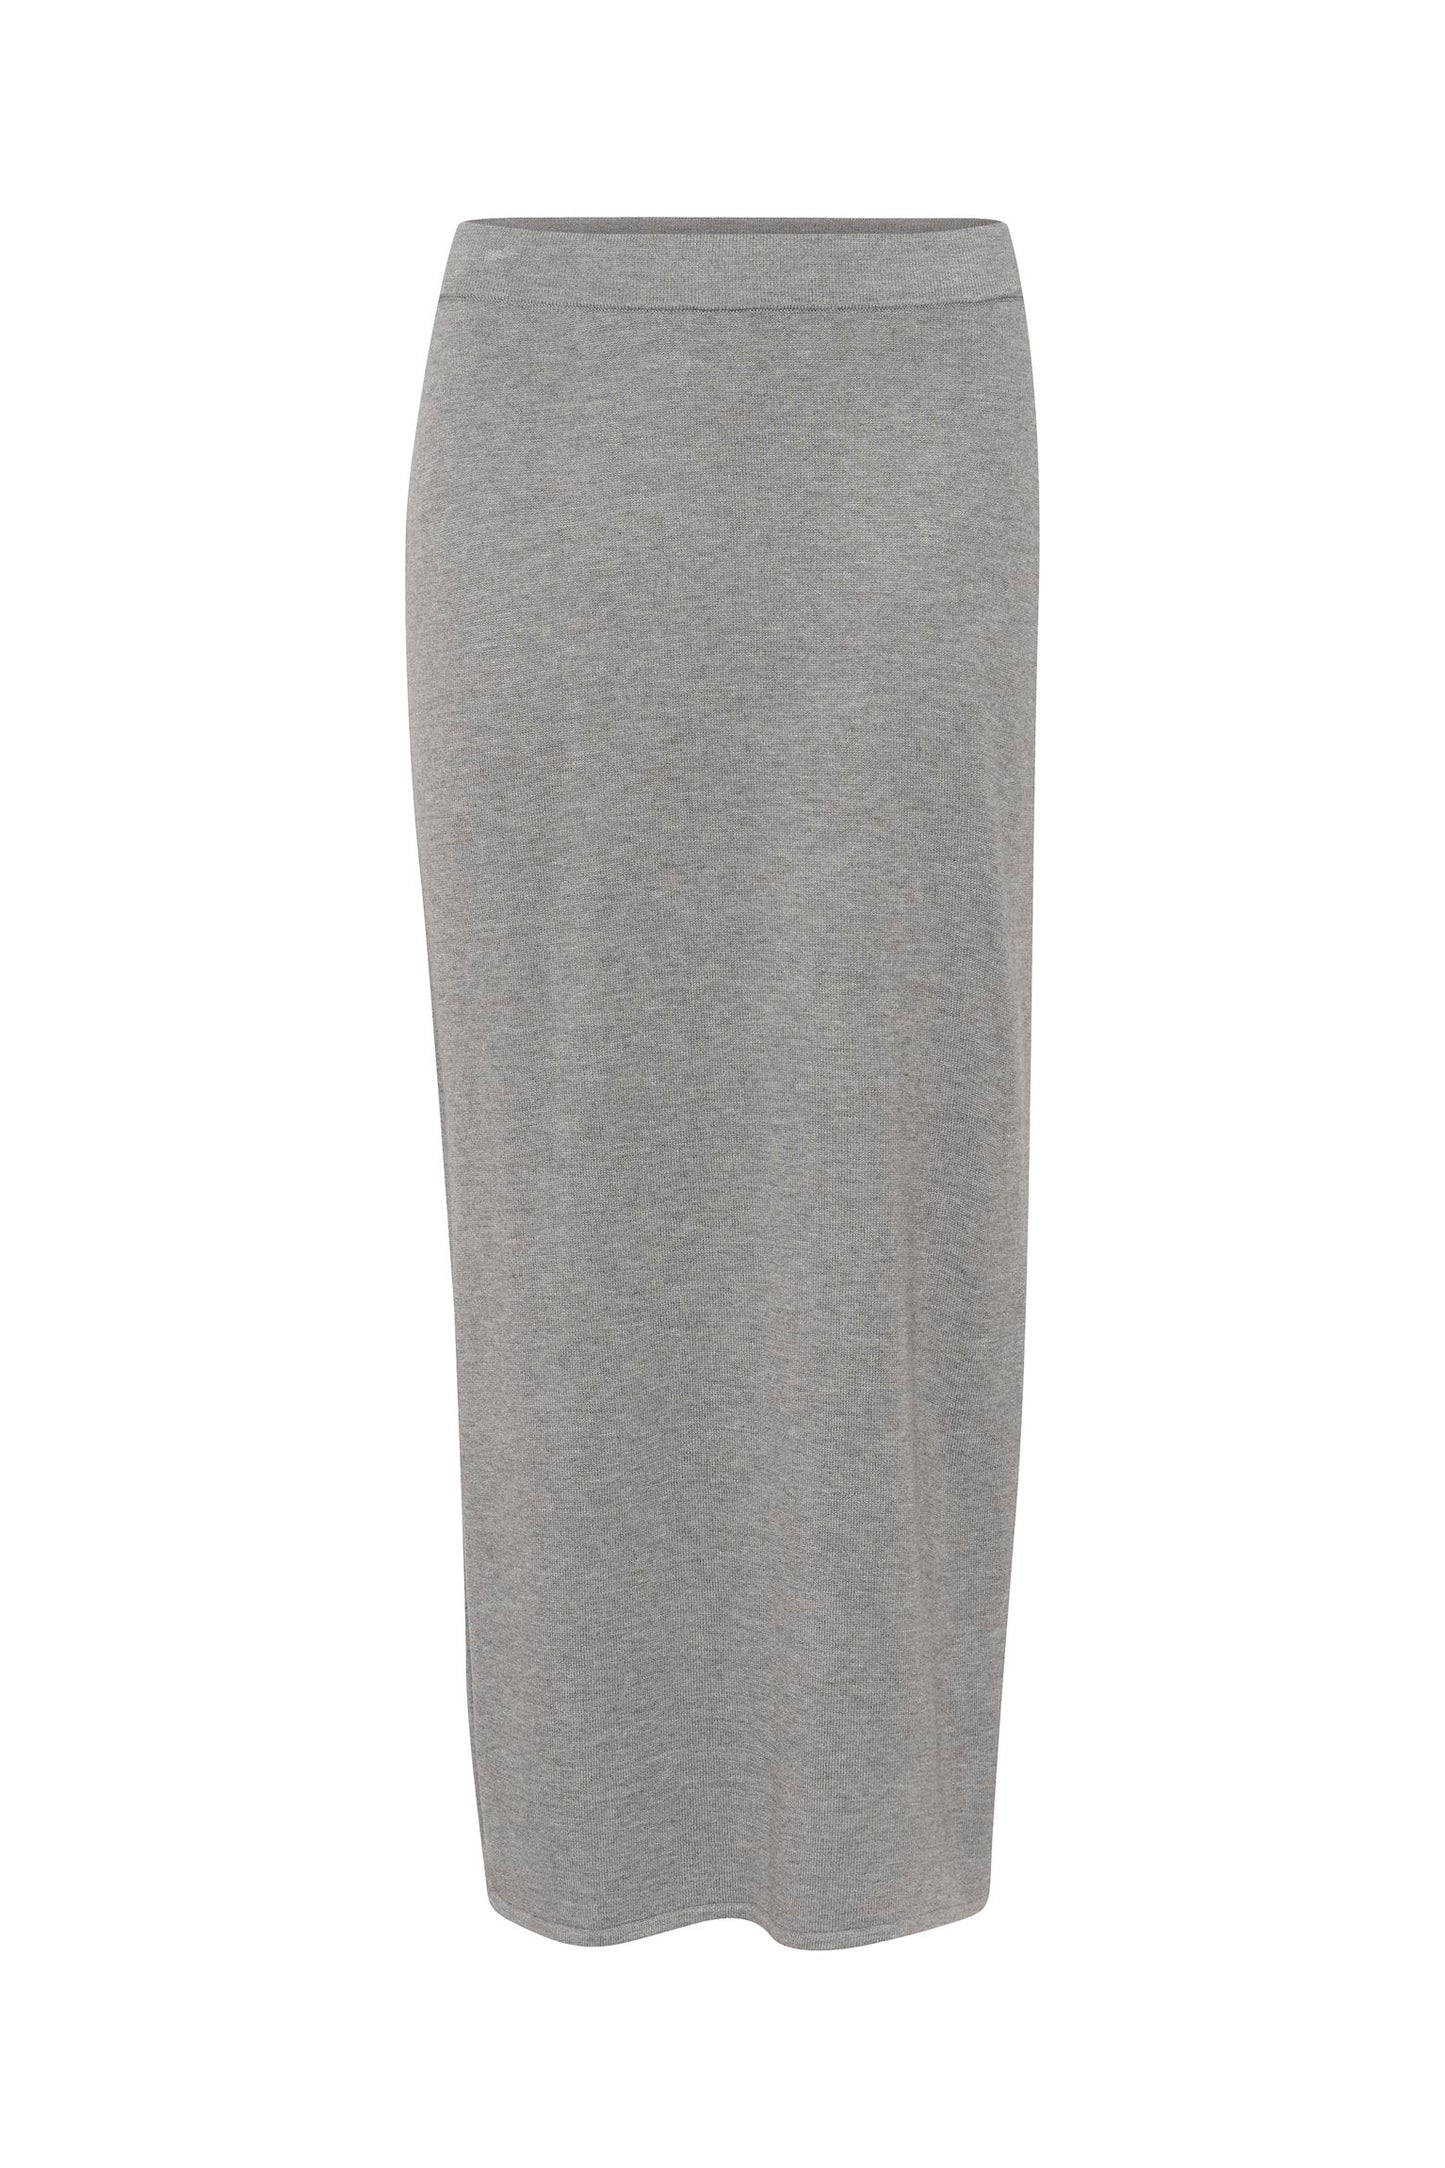 Emma Knit Skirt - My Essential Wardrobe